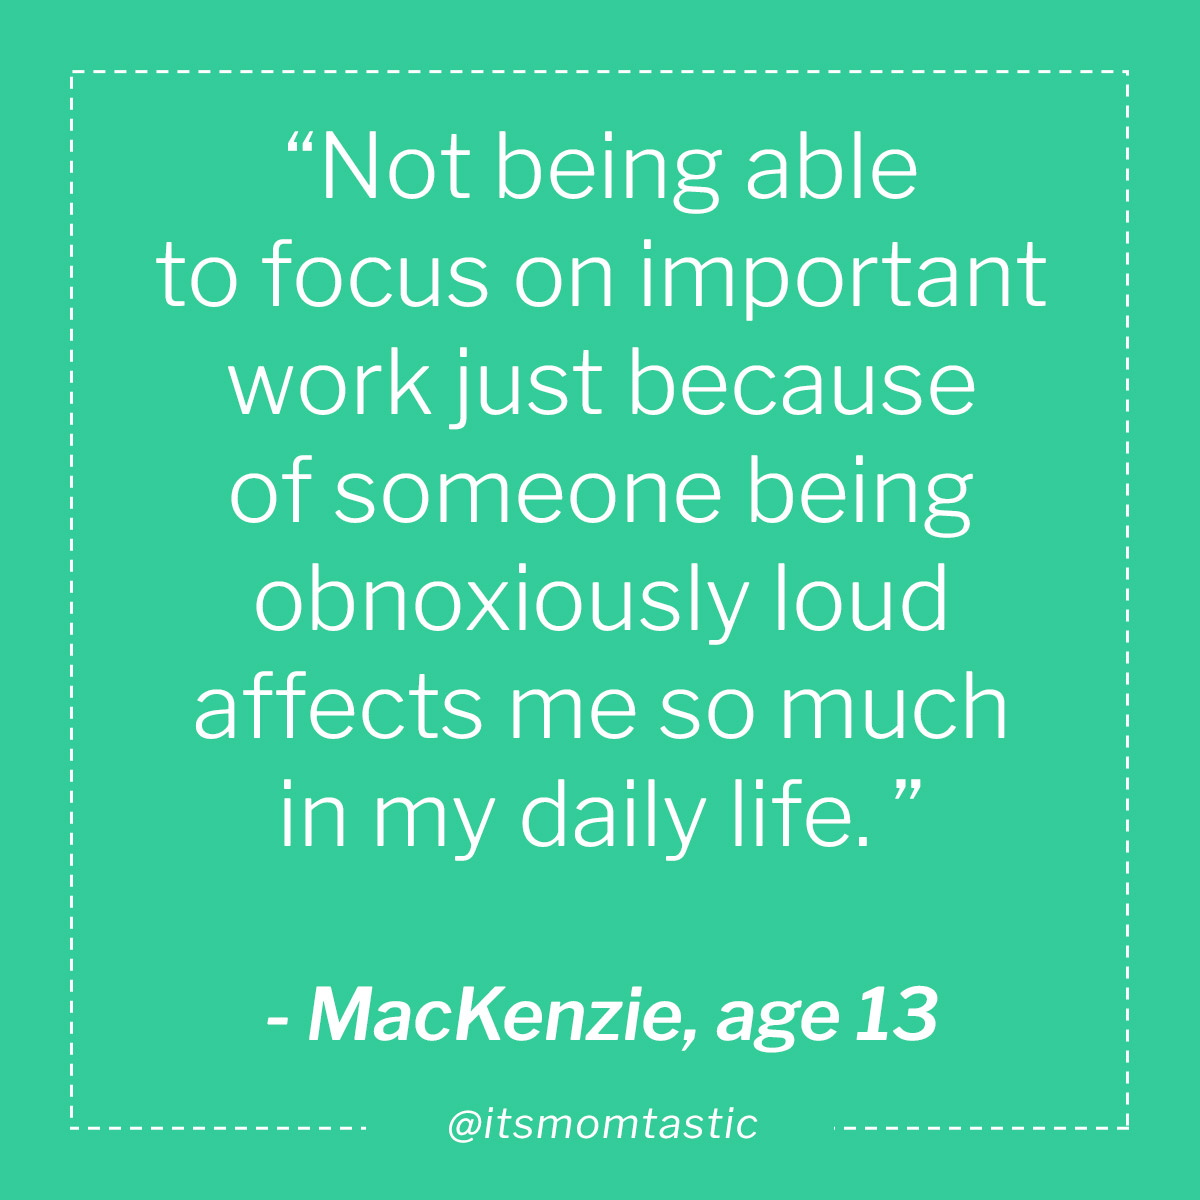 MacKenzie, age 13